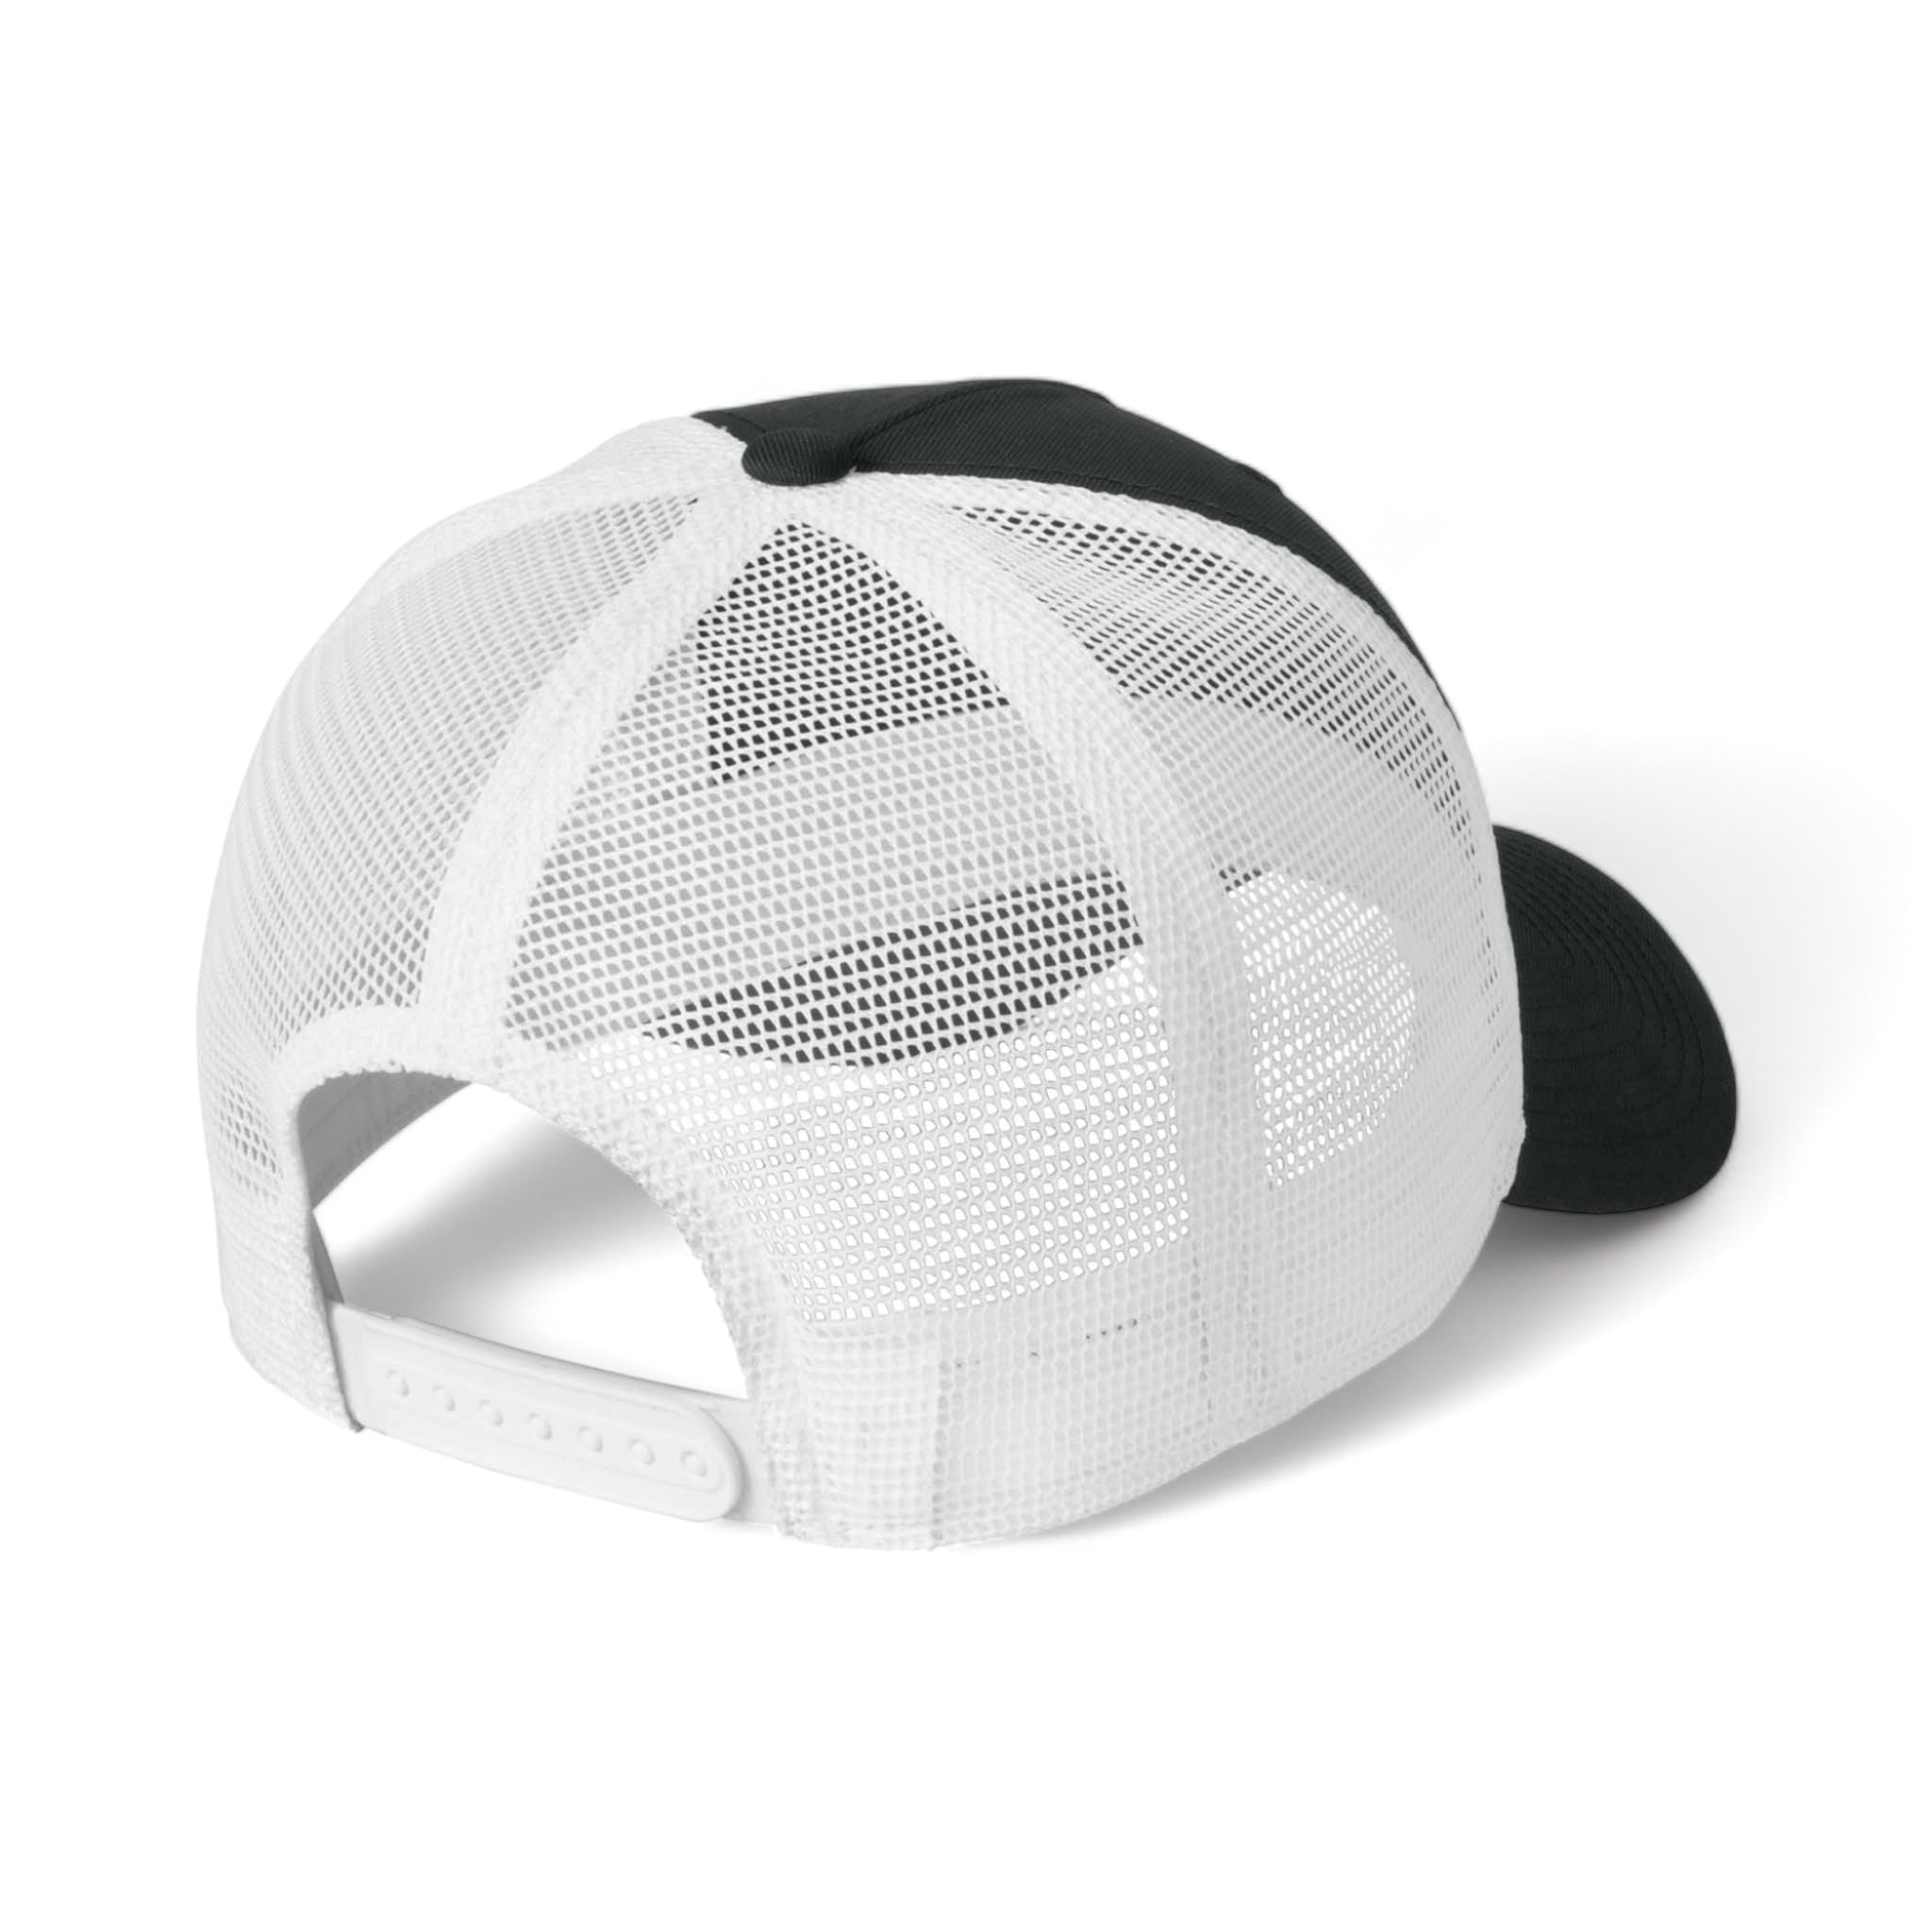 Back view of Nike NKFN9893 custom hat in black and white